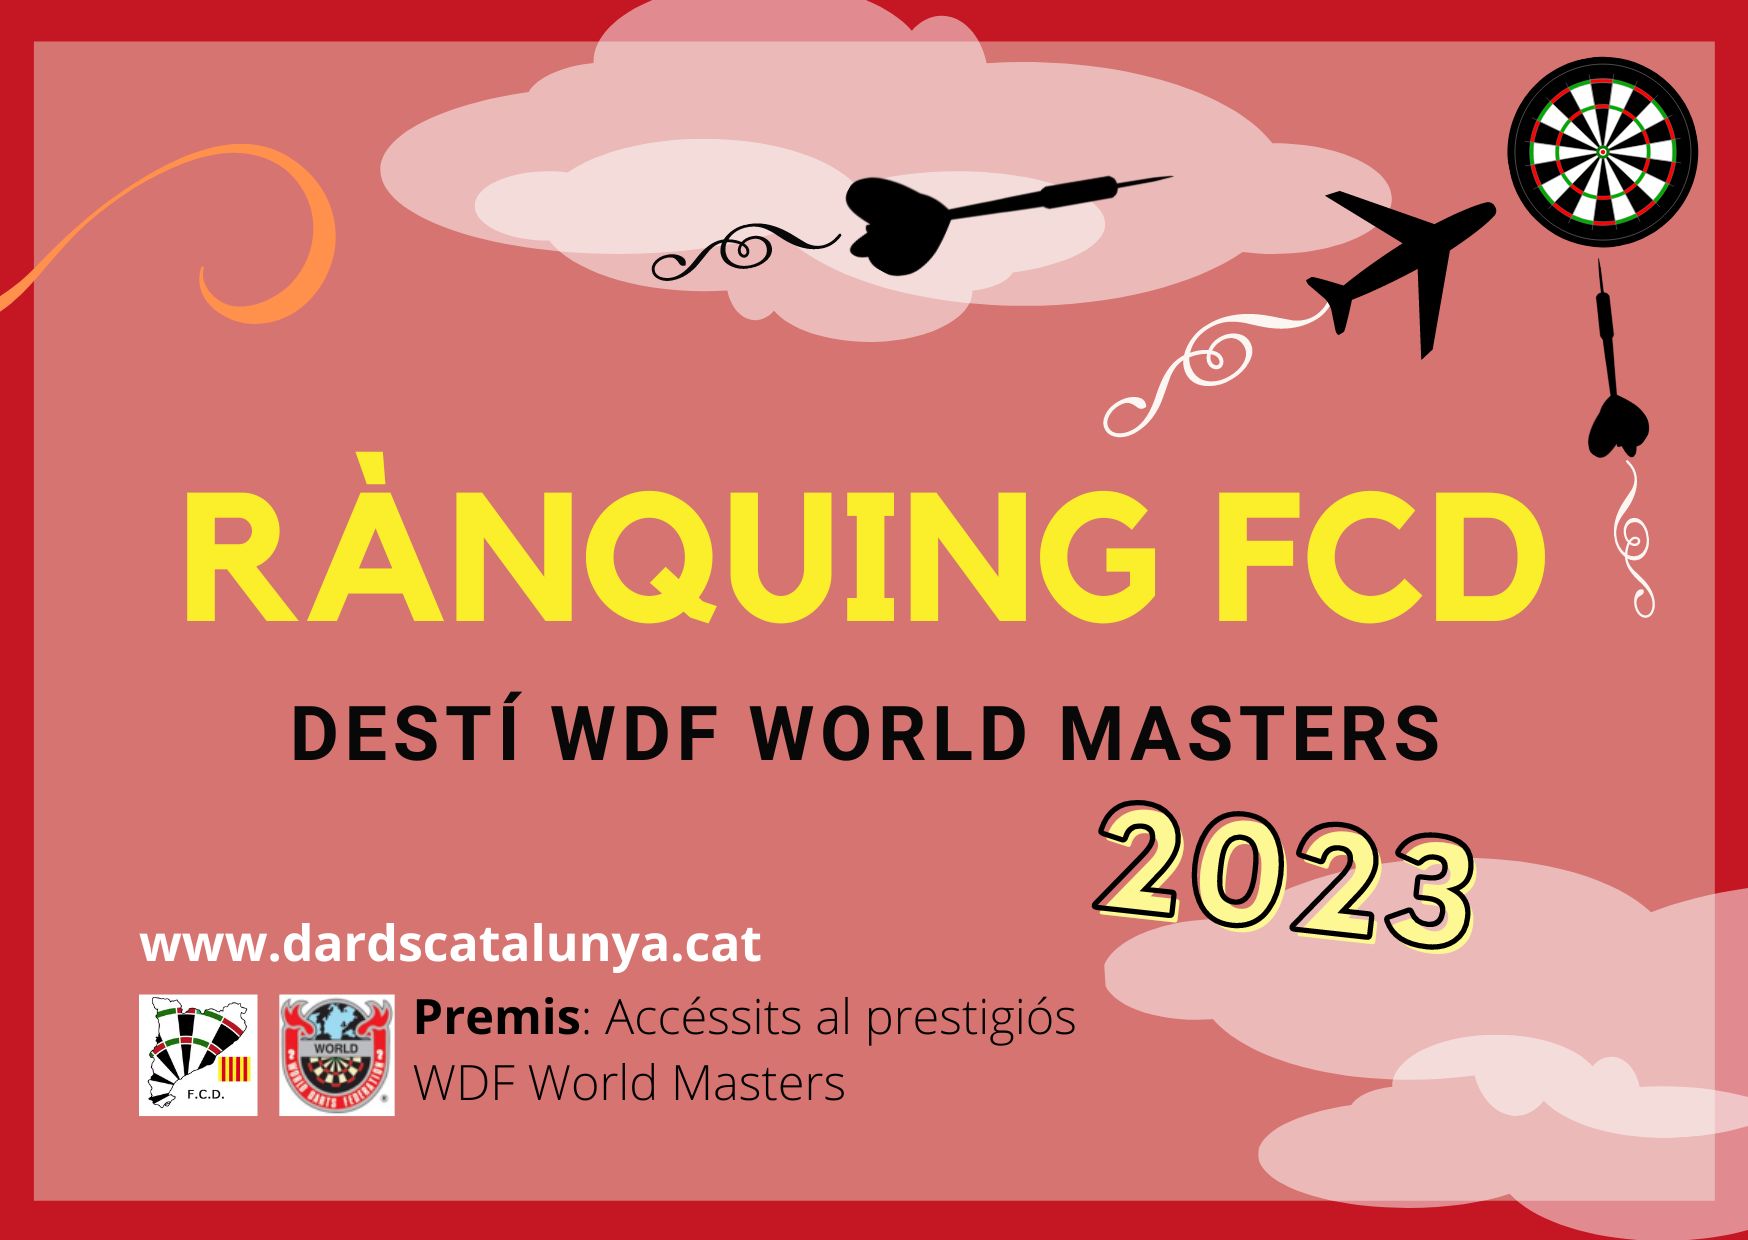 https://www.dardscatalunya.cat/script/photo/16678067152023-Ranquing-FCD-desti-wdf-world-masters.jpg